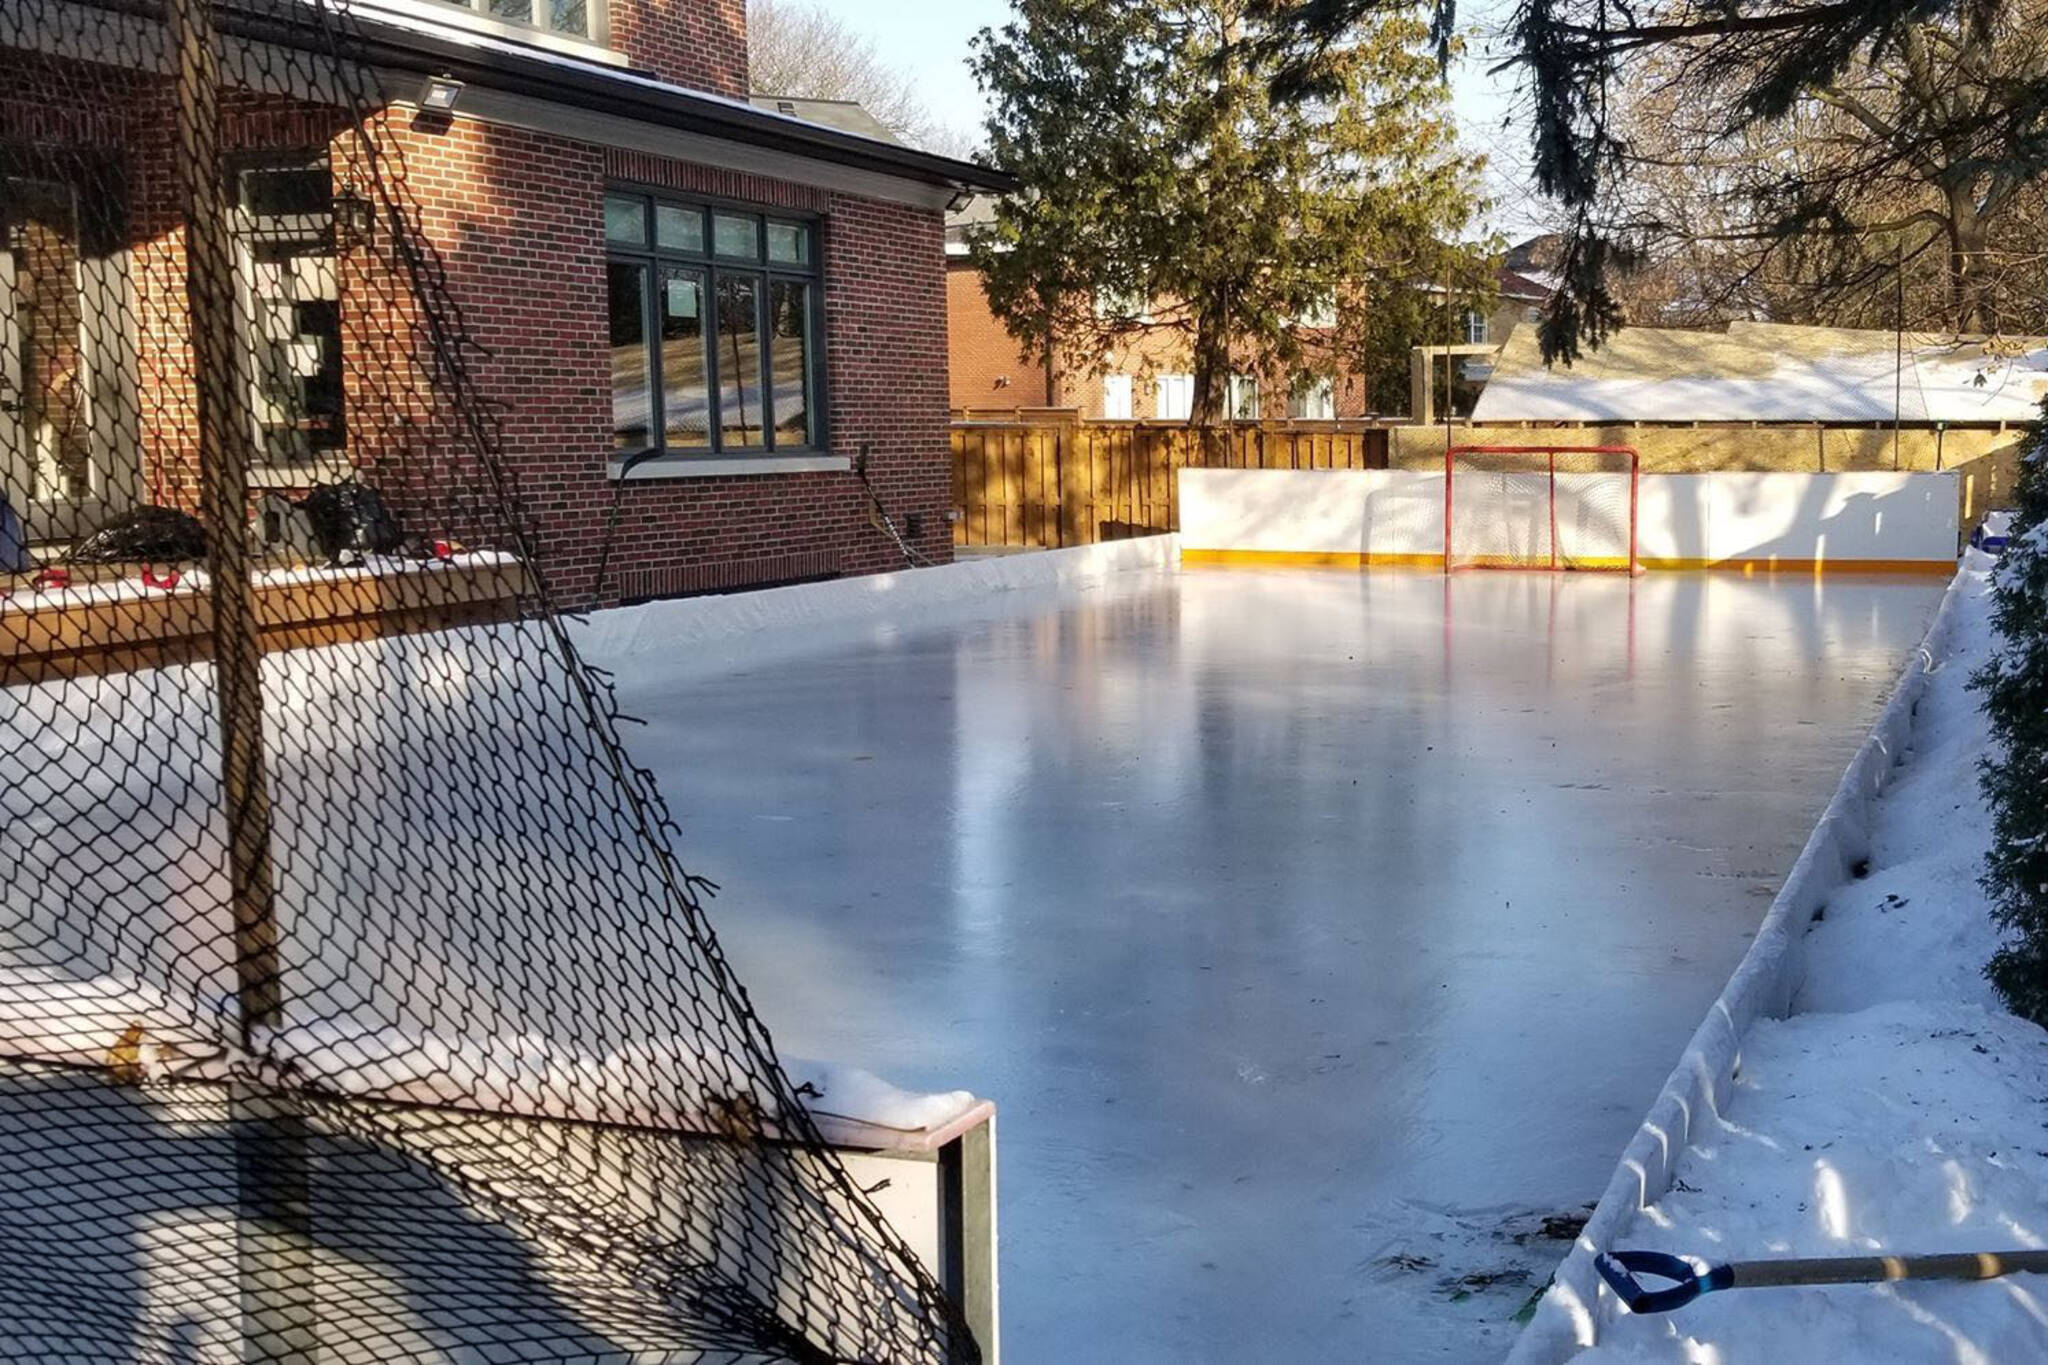 Toronto created an epic backyard ice rink